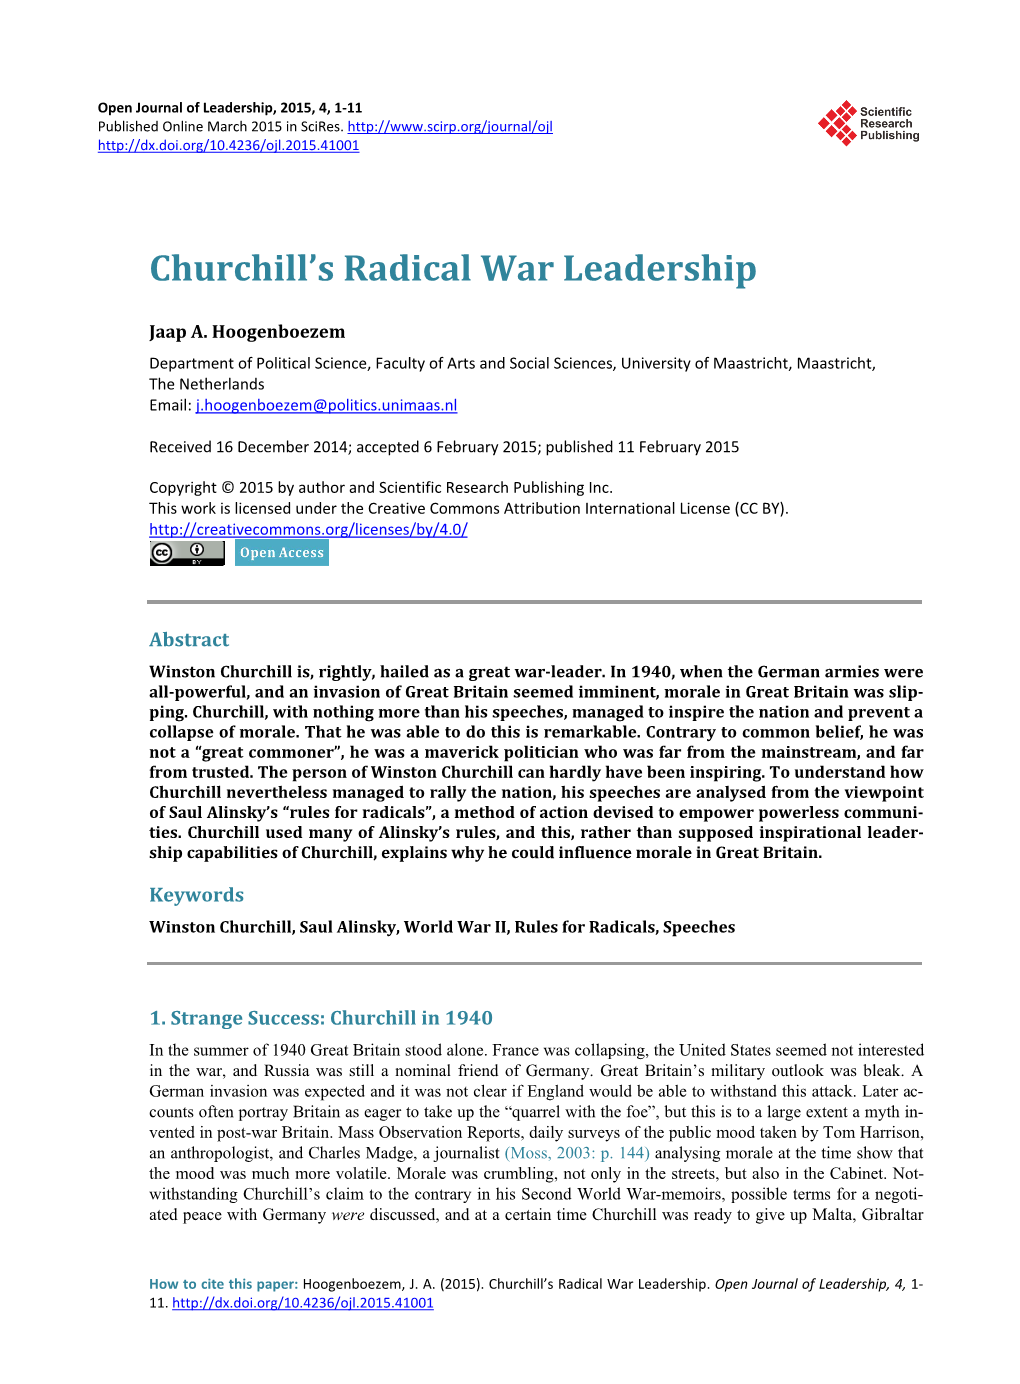 Churchill's Radical War Leadership